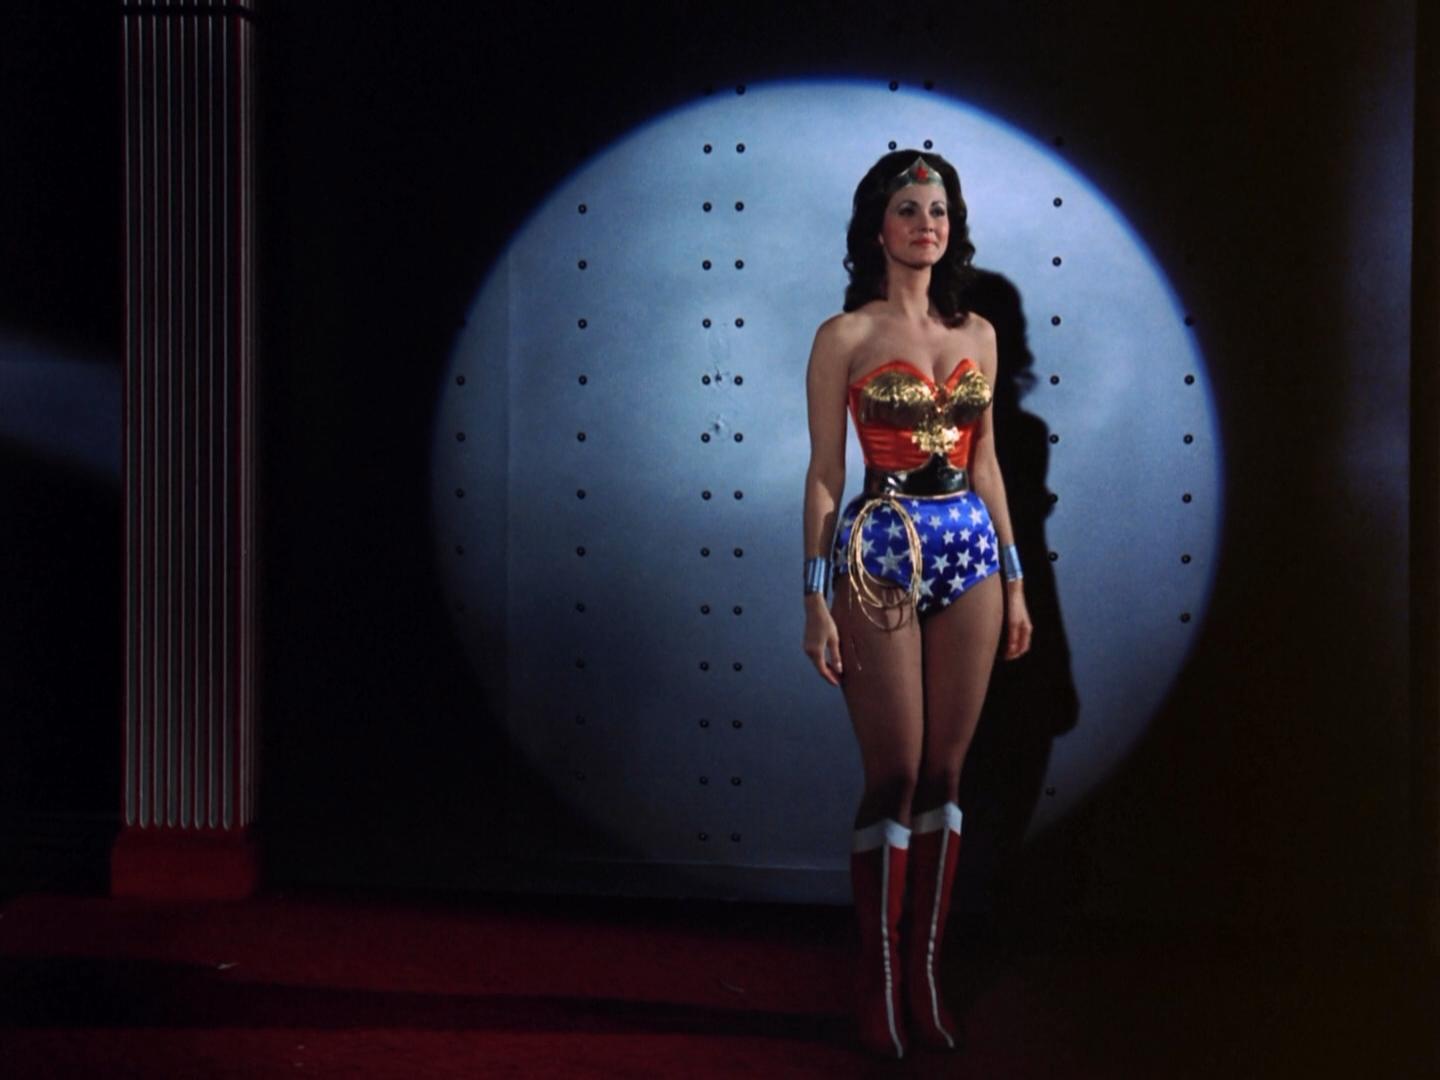 Wonder Woman (1975) Wallpapers